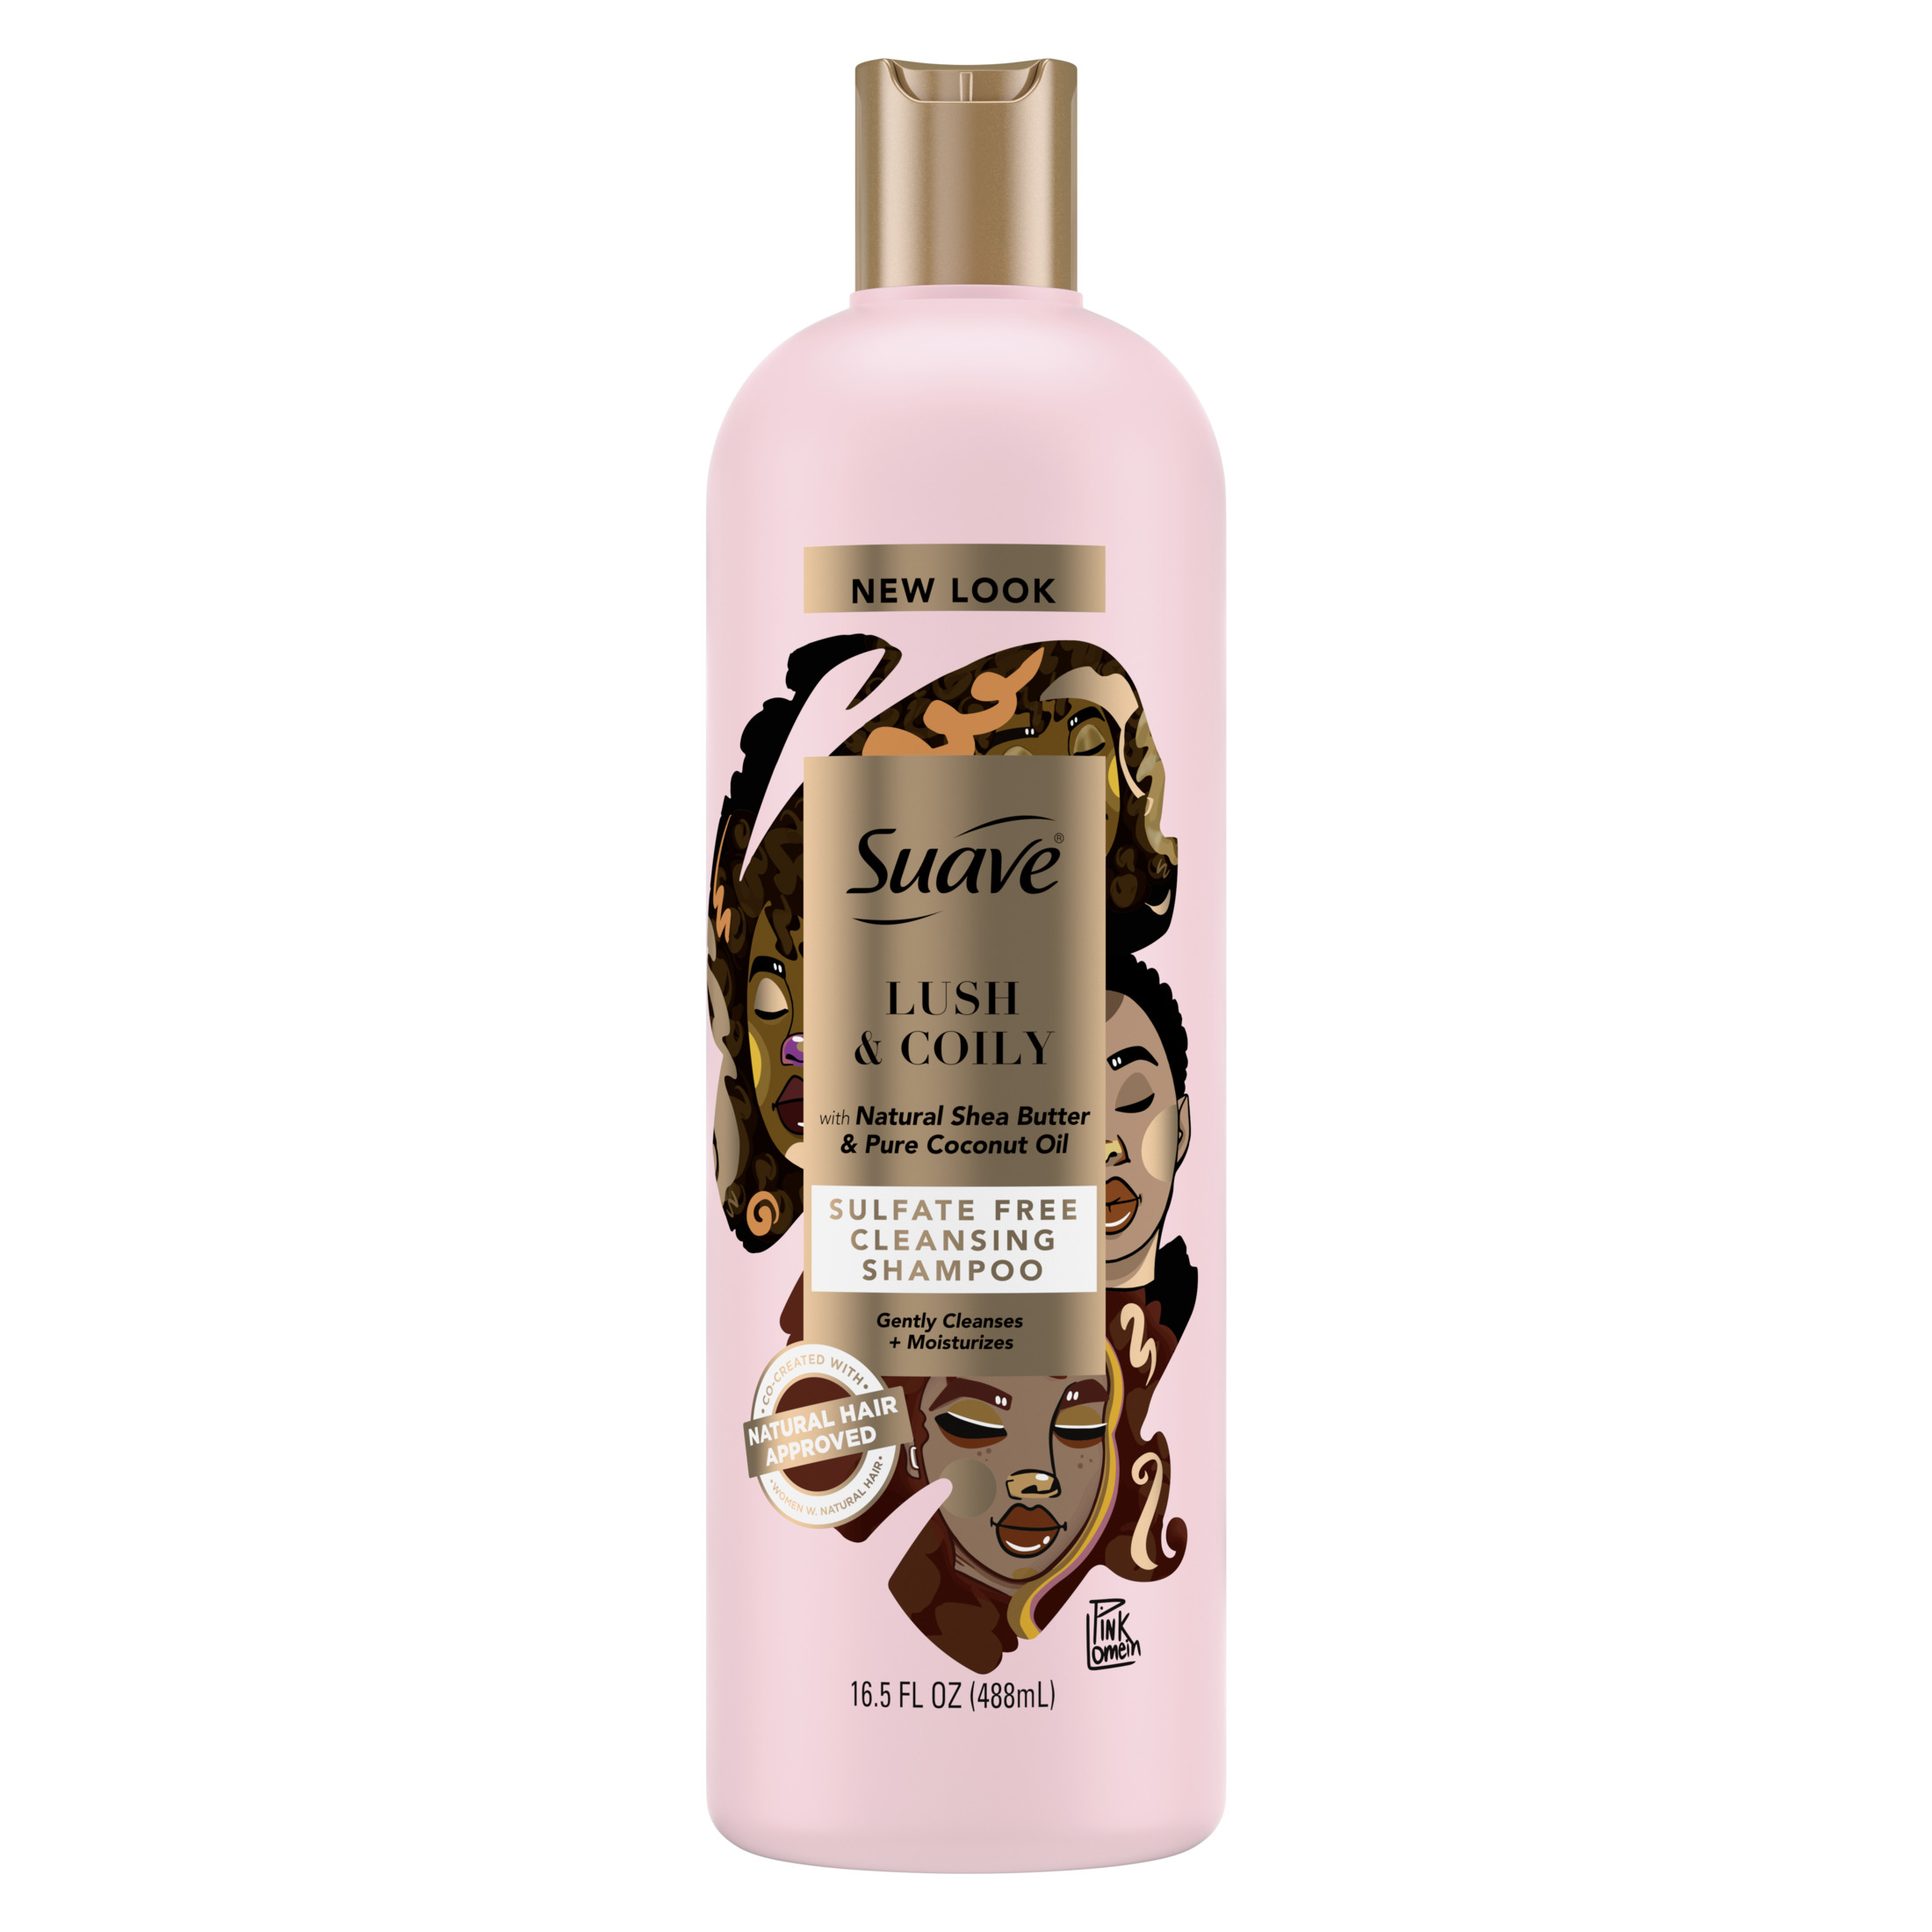 Suave Shea Butter & Pure Coconut Oil Moisturizing Shampoo 16.5 fl oz - image 1 of 9